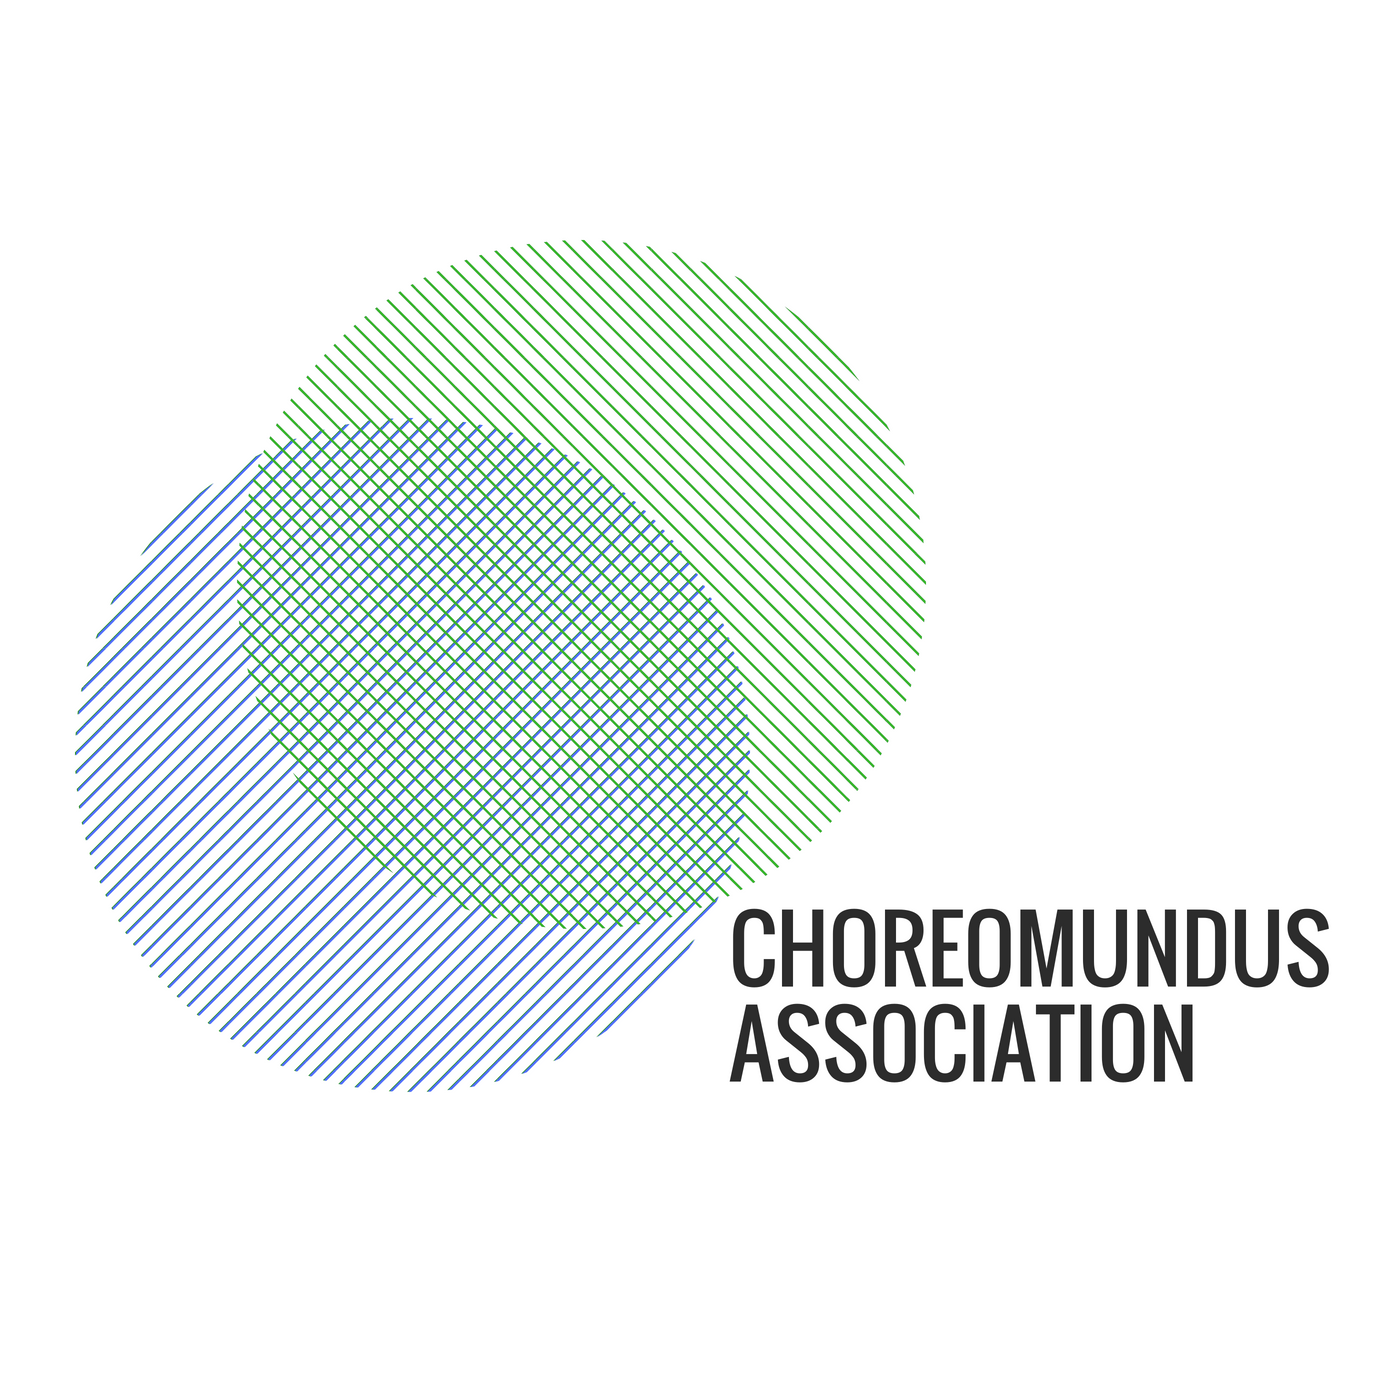 Choreomundus association logo